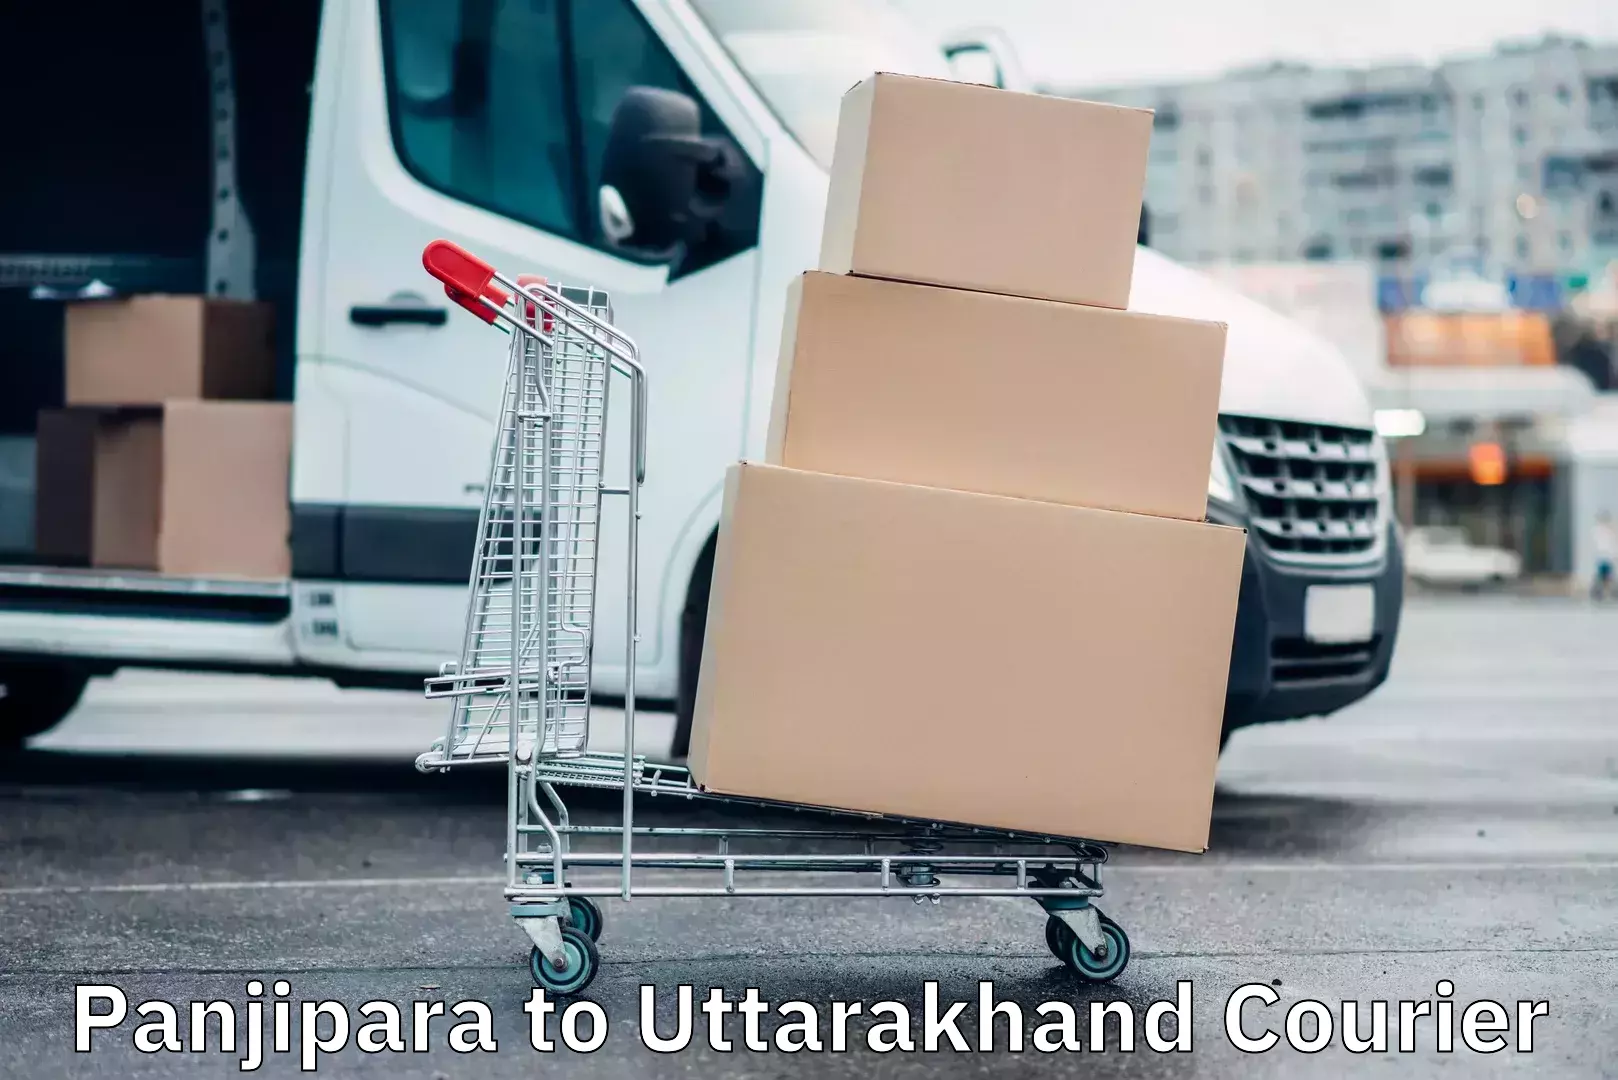 Global logistics network Panjipara to Uttarakhand